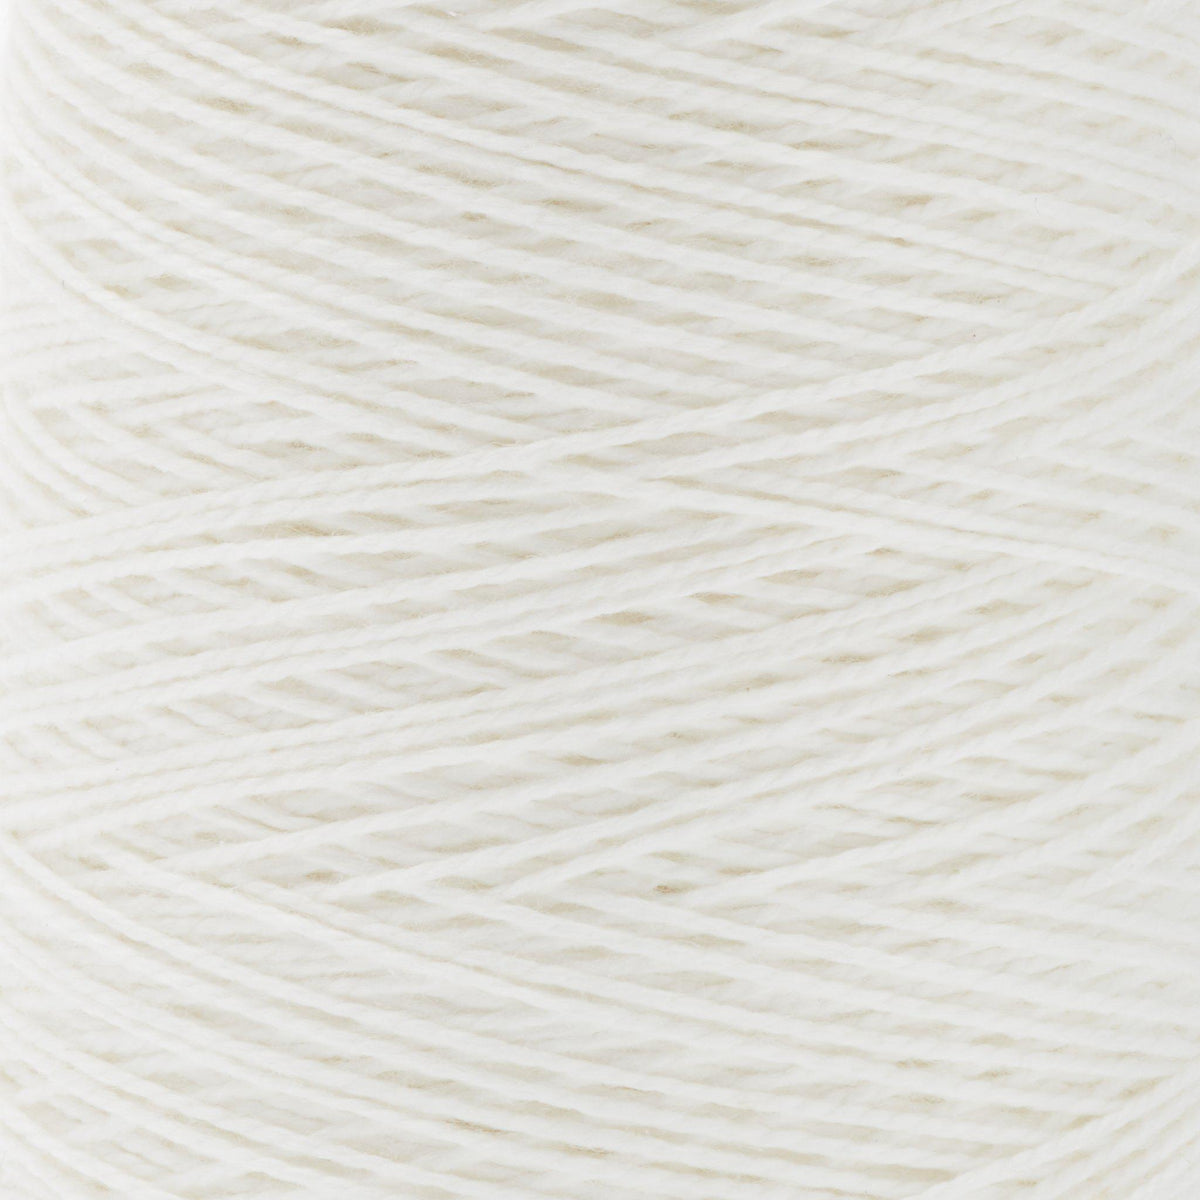 4 Pound Cone-10/2 Organic Cotton Weaving Yarn-Natural